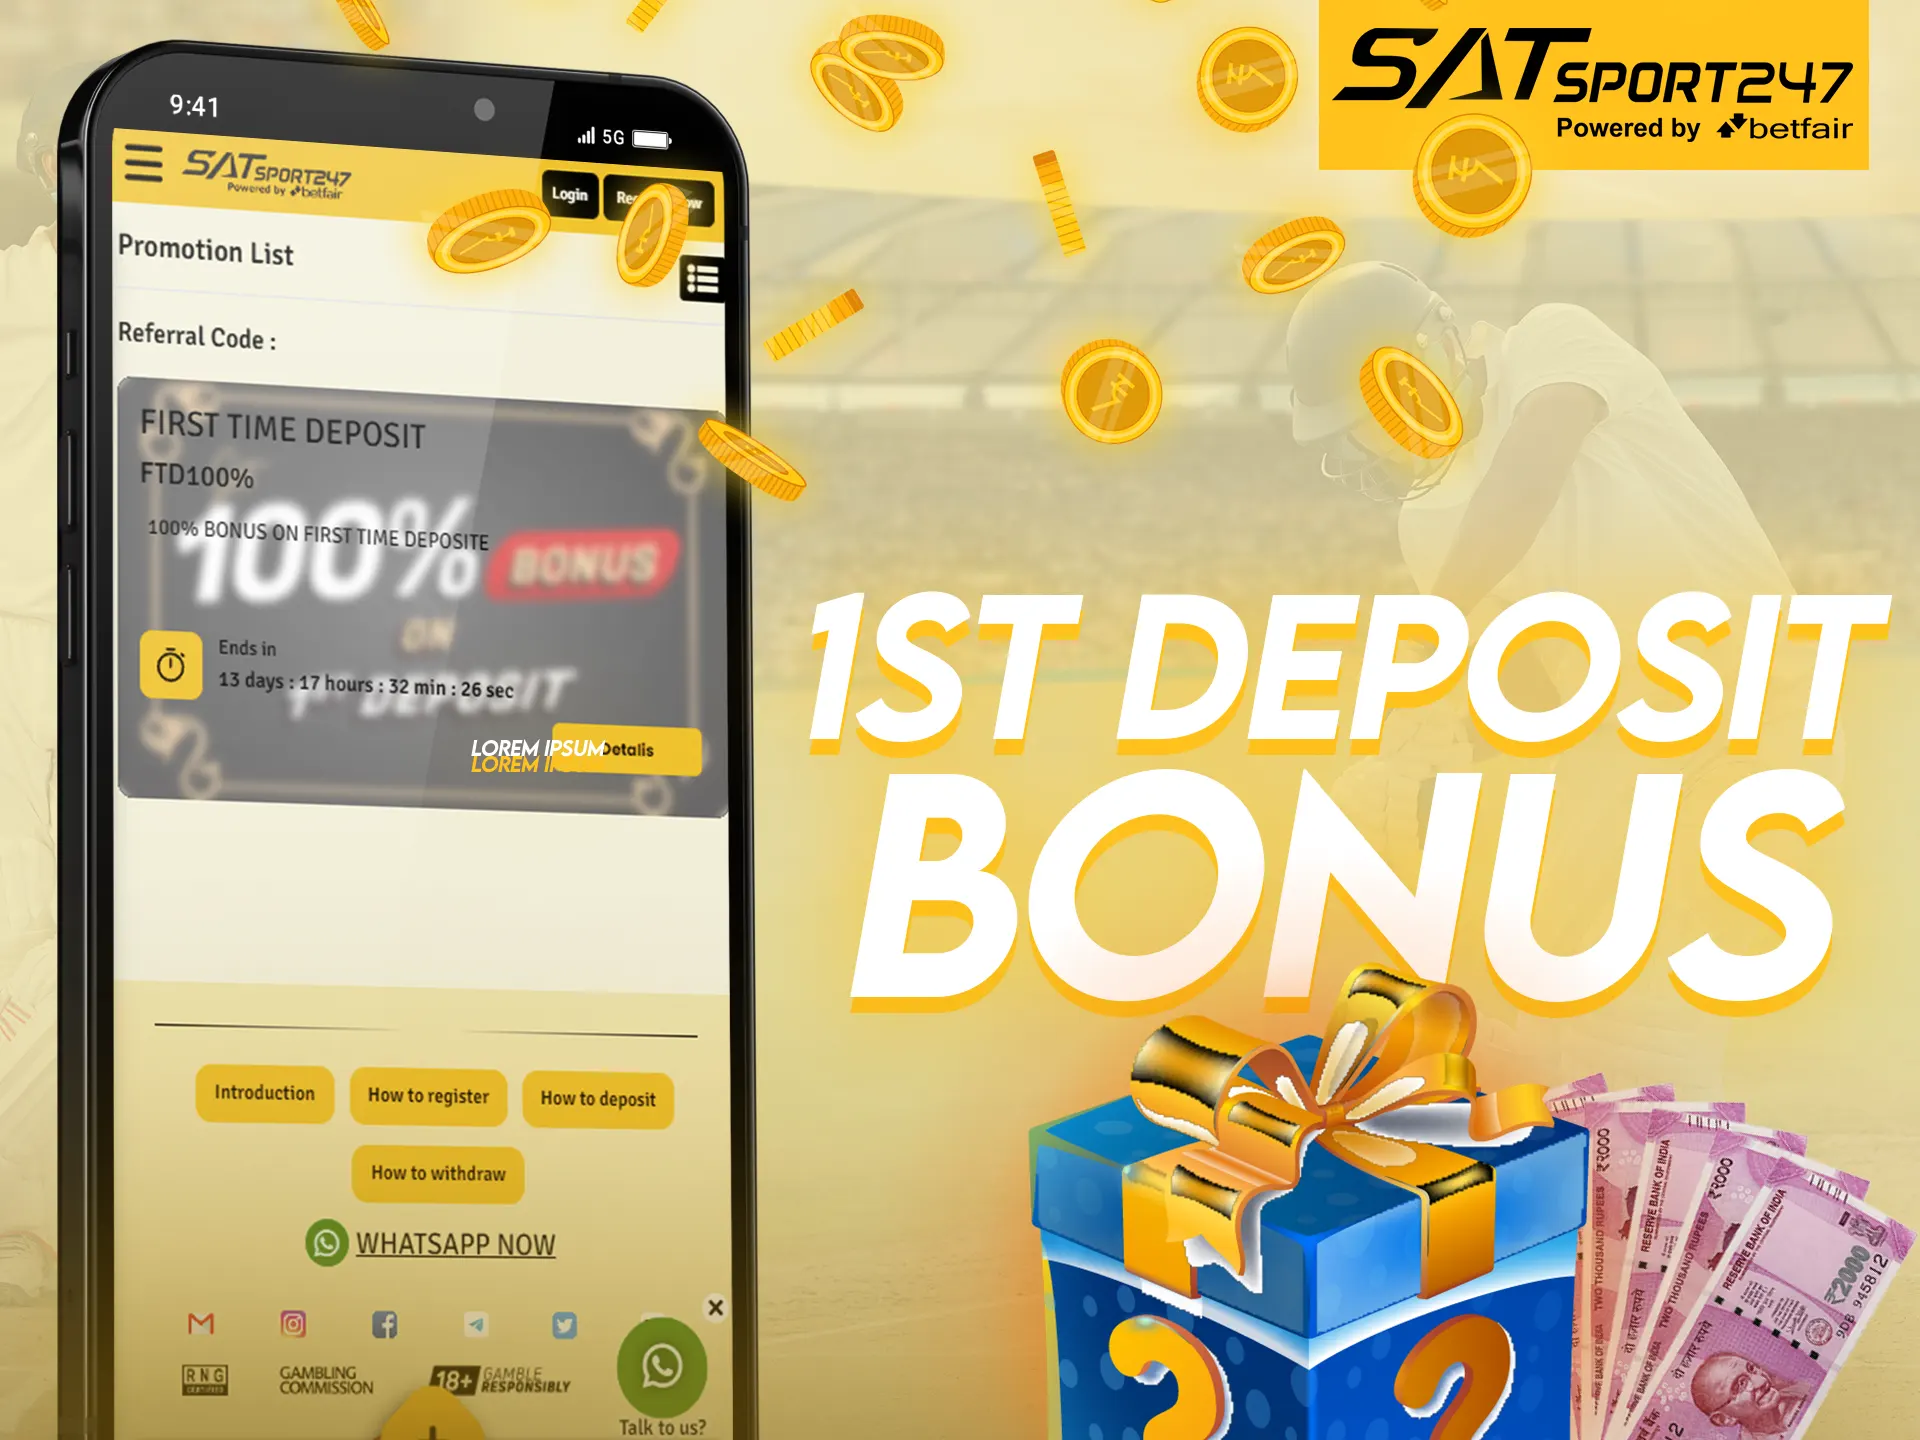 At Satsport247 app get a bonus on your first deposit.